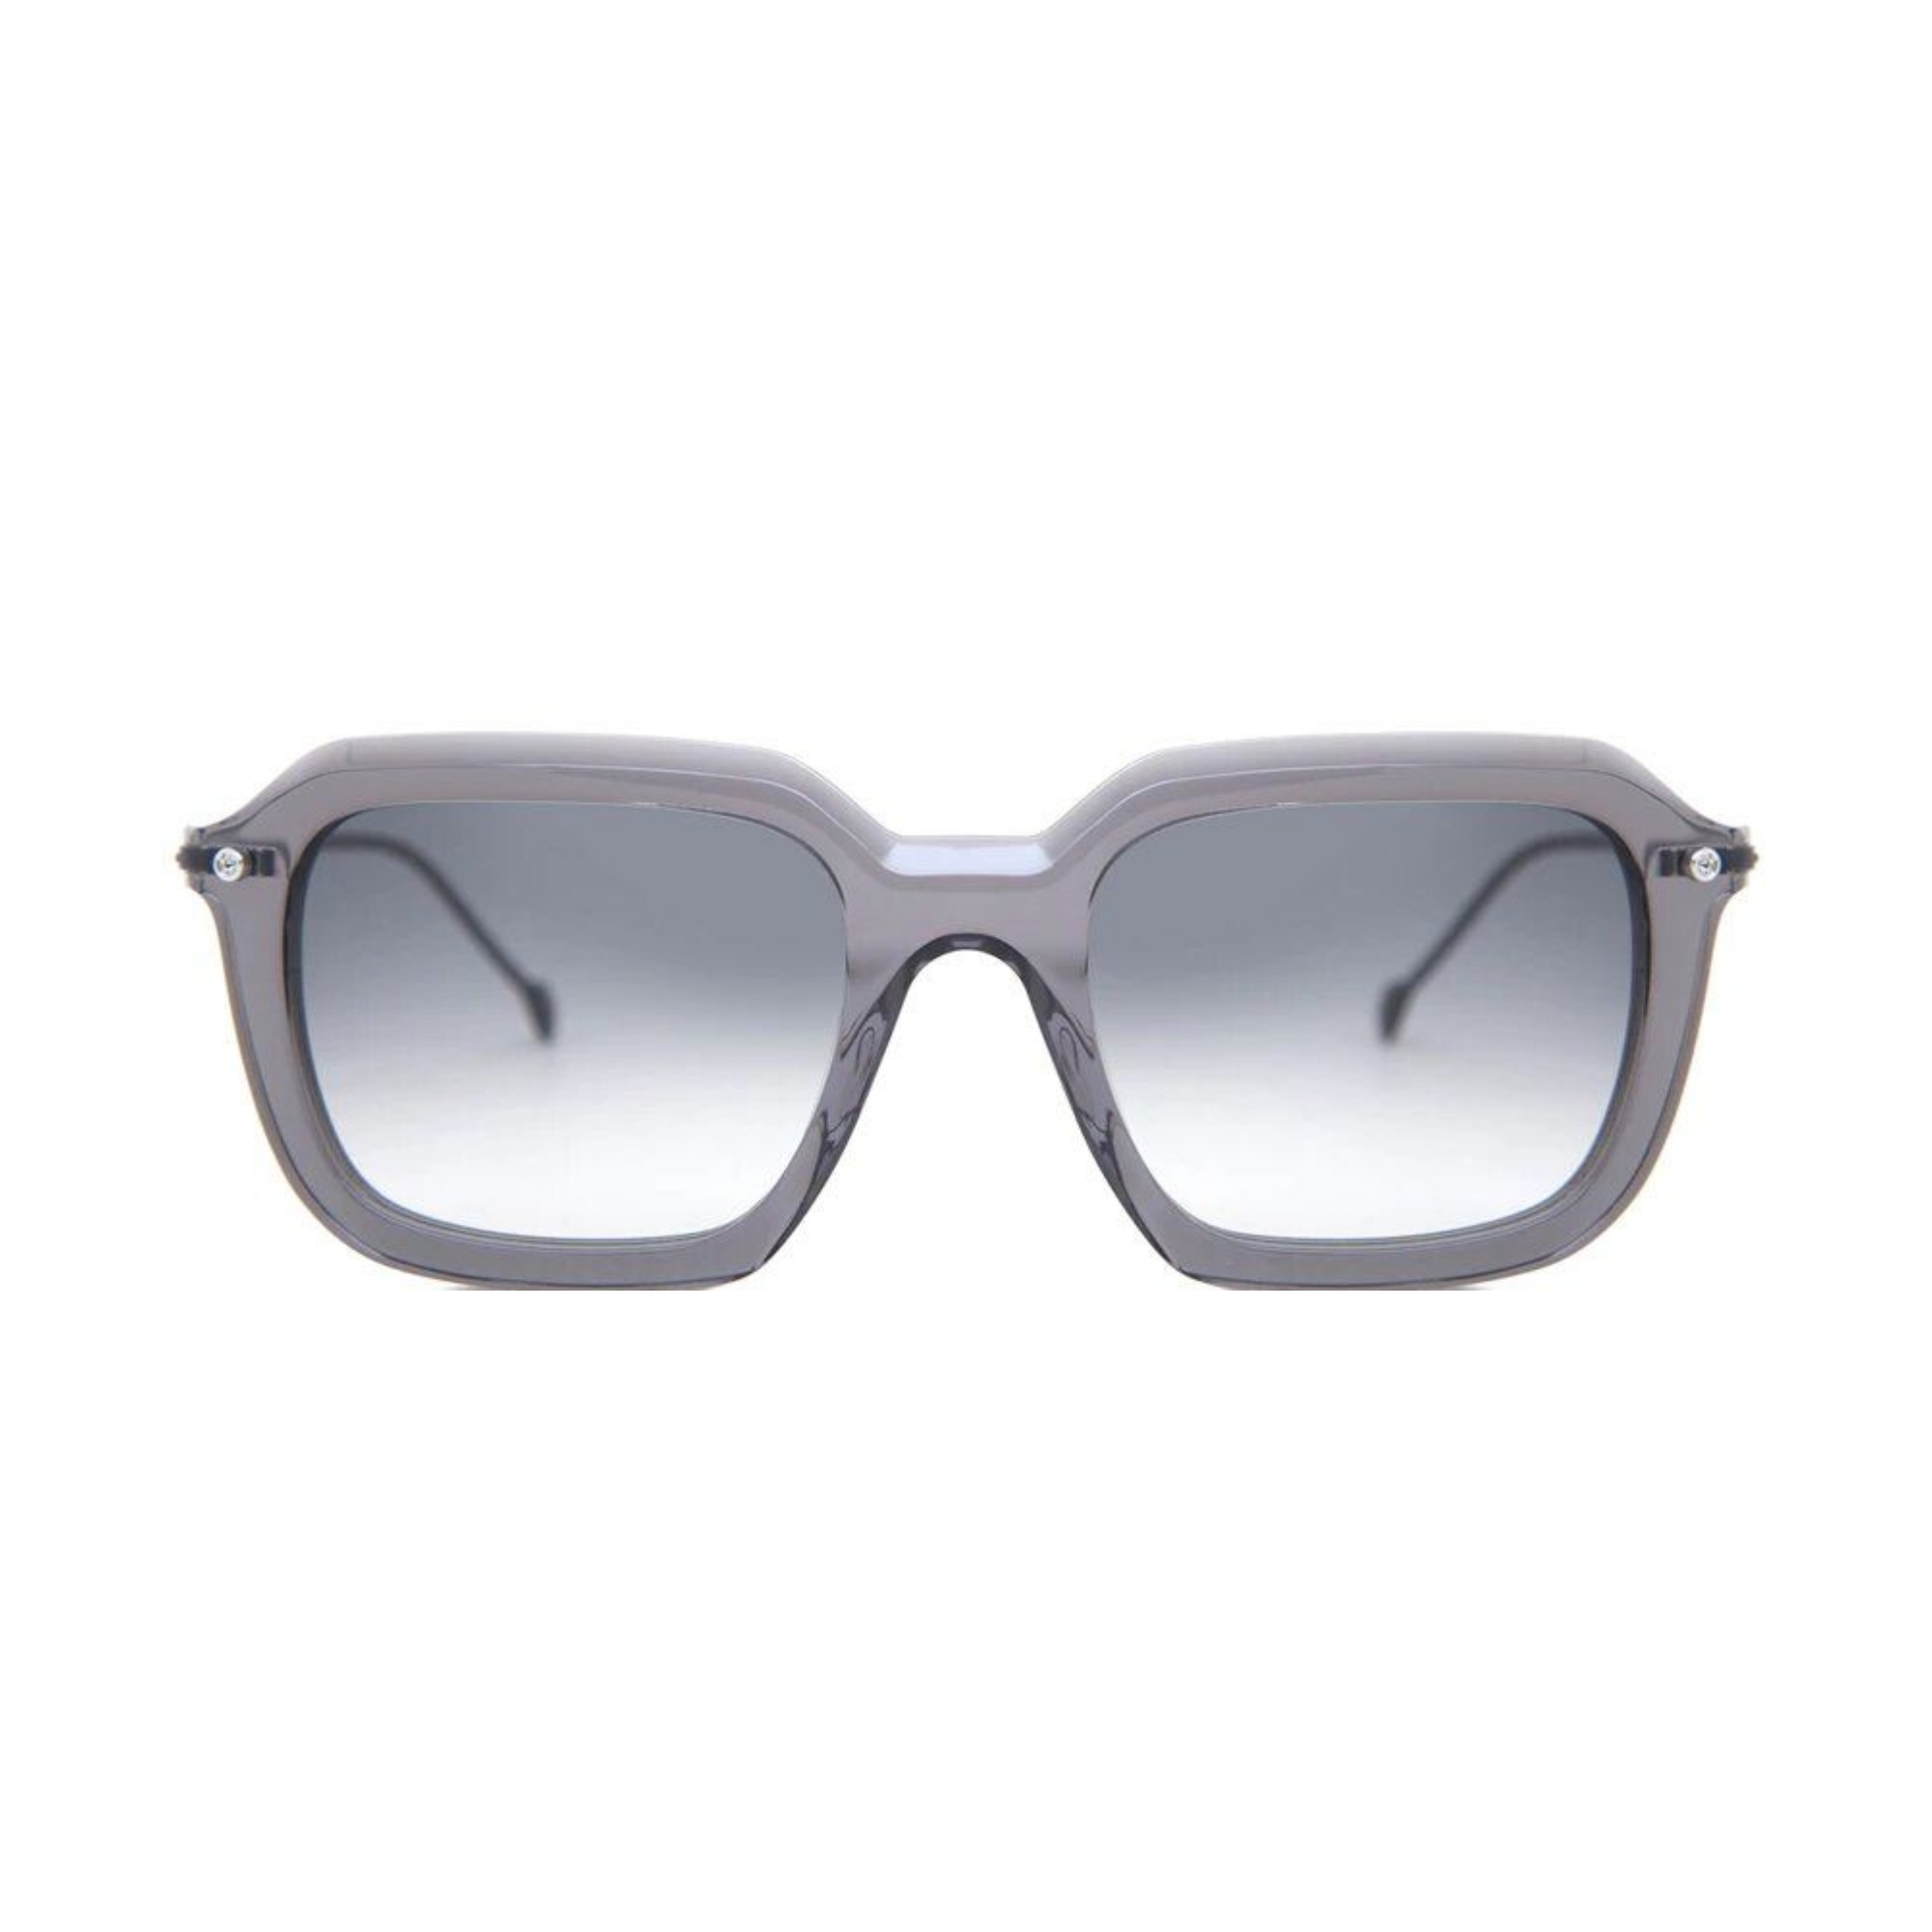 Солнцезащитные очки Yohji Yamamoto